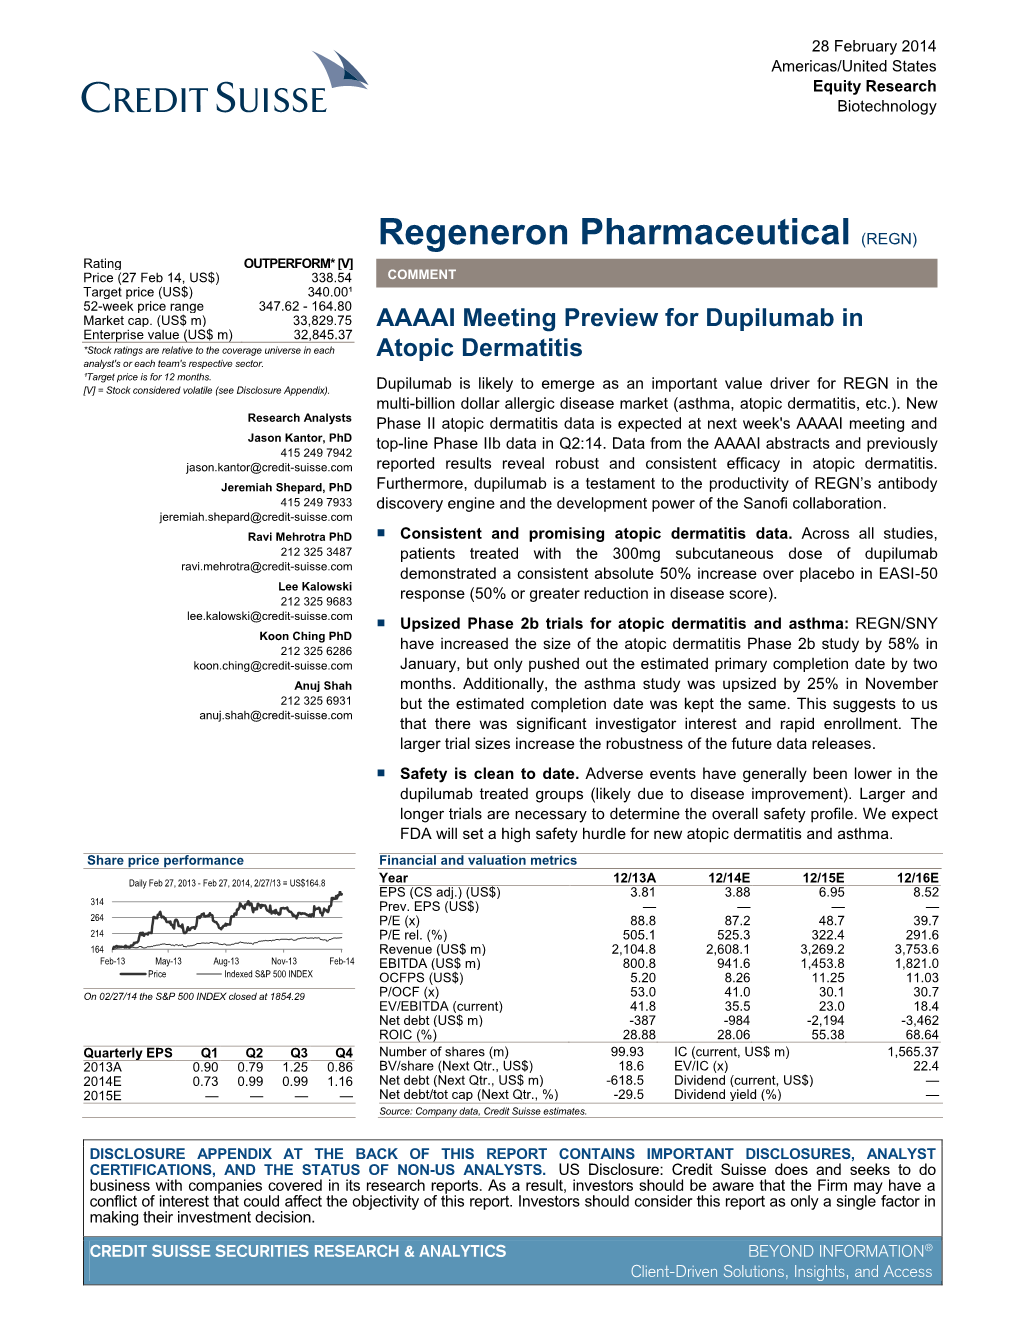 Regeneron Pharmaceutical (REGN) Rating OUTPERFORM* [V] Price (27 Feb 14, US$) 338.54 COMMENT Target Price (US$) 340.00¹ 52-Week Price Range 347.62 - 164.80 Market Cap